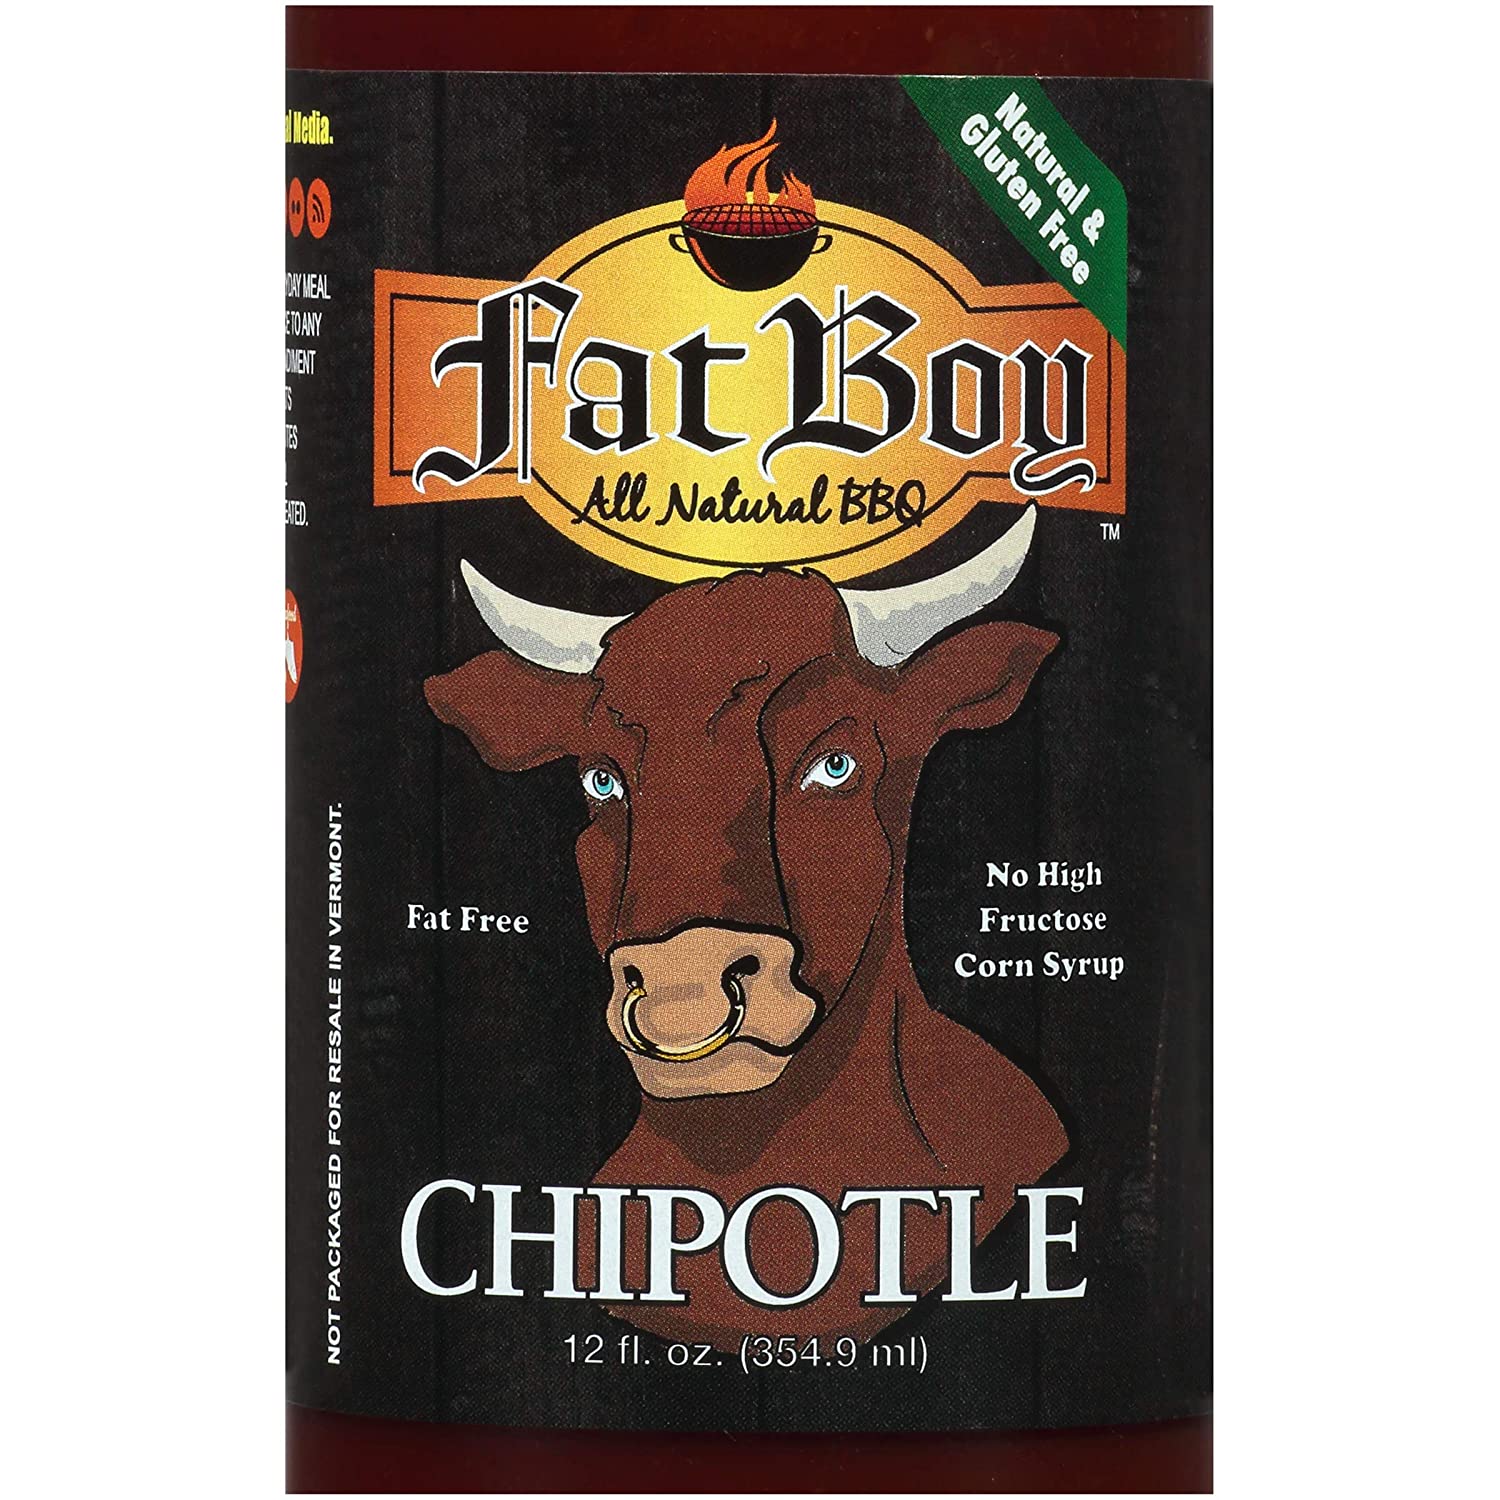 Fat Boy All Natural BBQ Chipotle BBQ Sauce 12 oz Bottle Gluten Free 00084